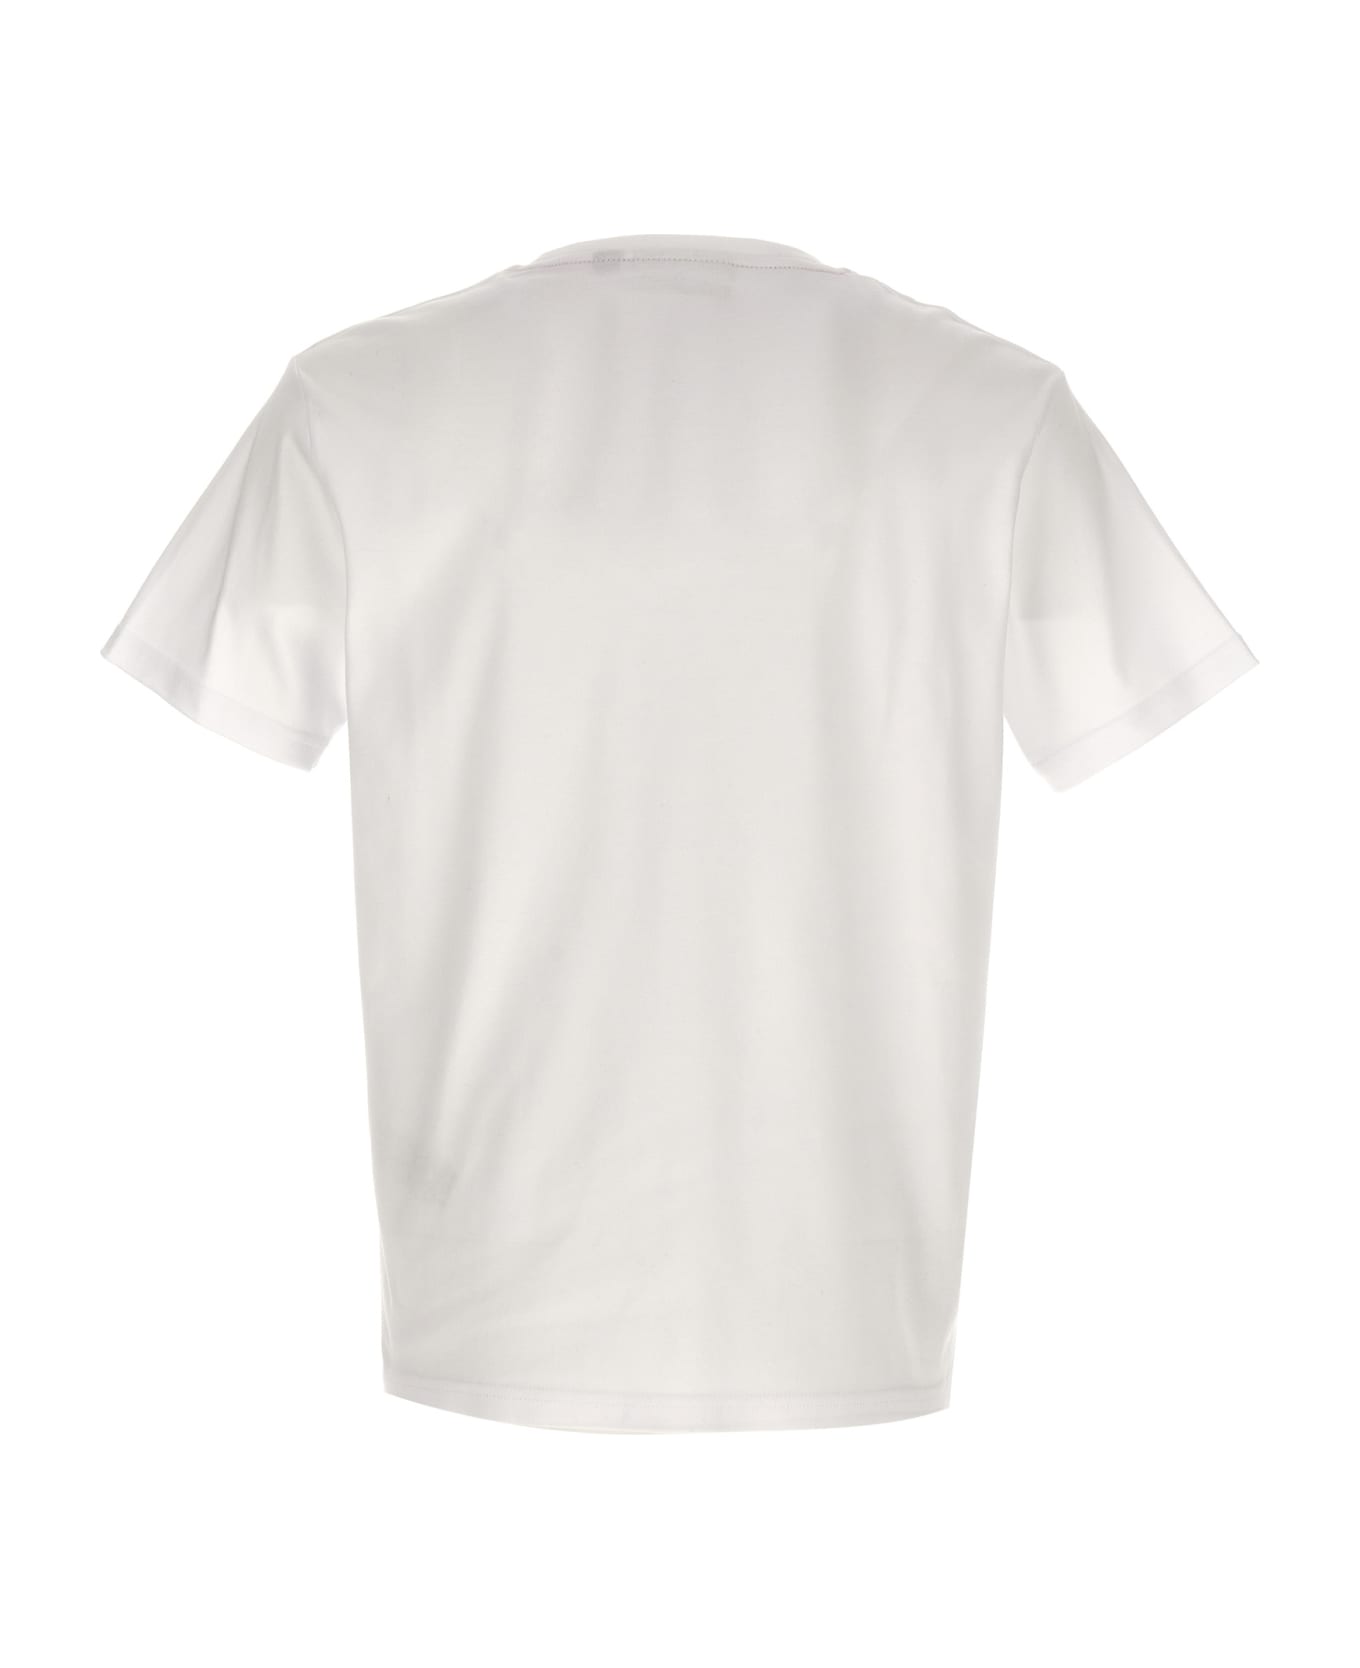 GCDS Basic Logo T-shirt - Bianco